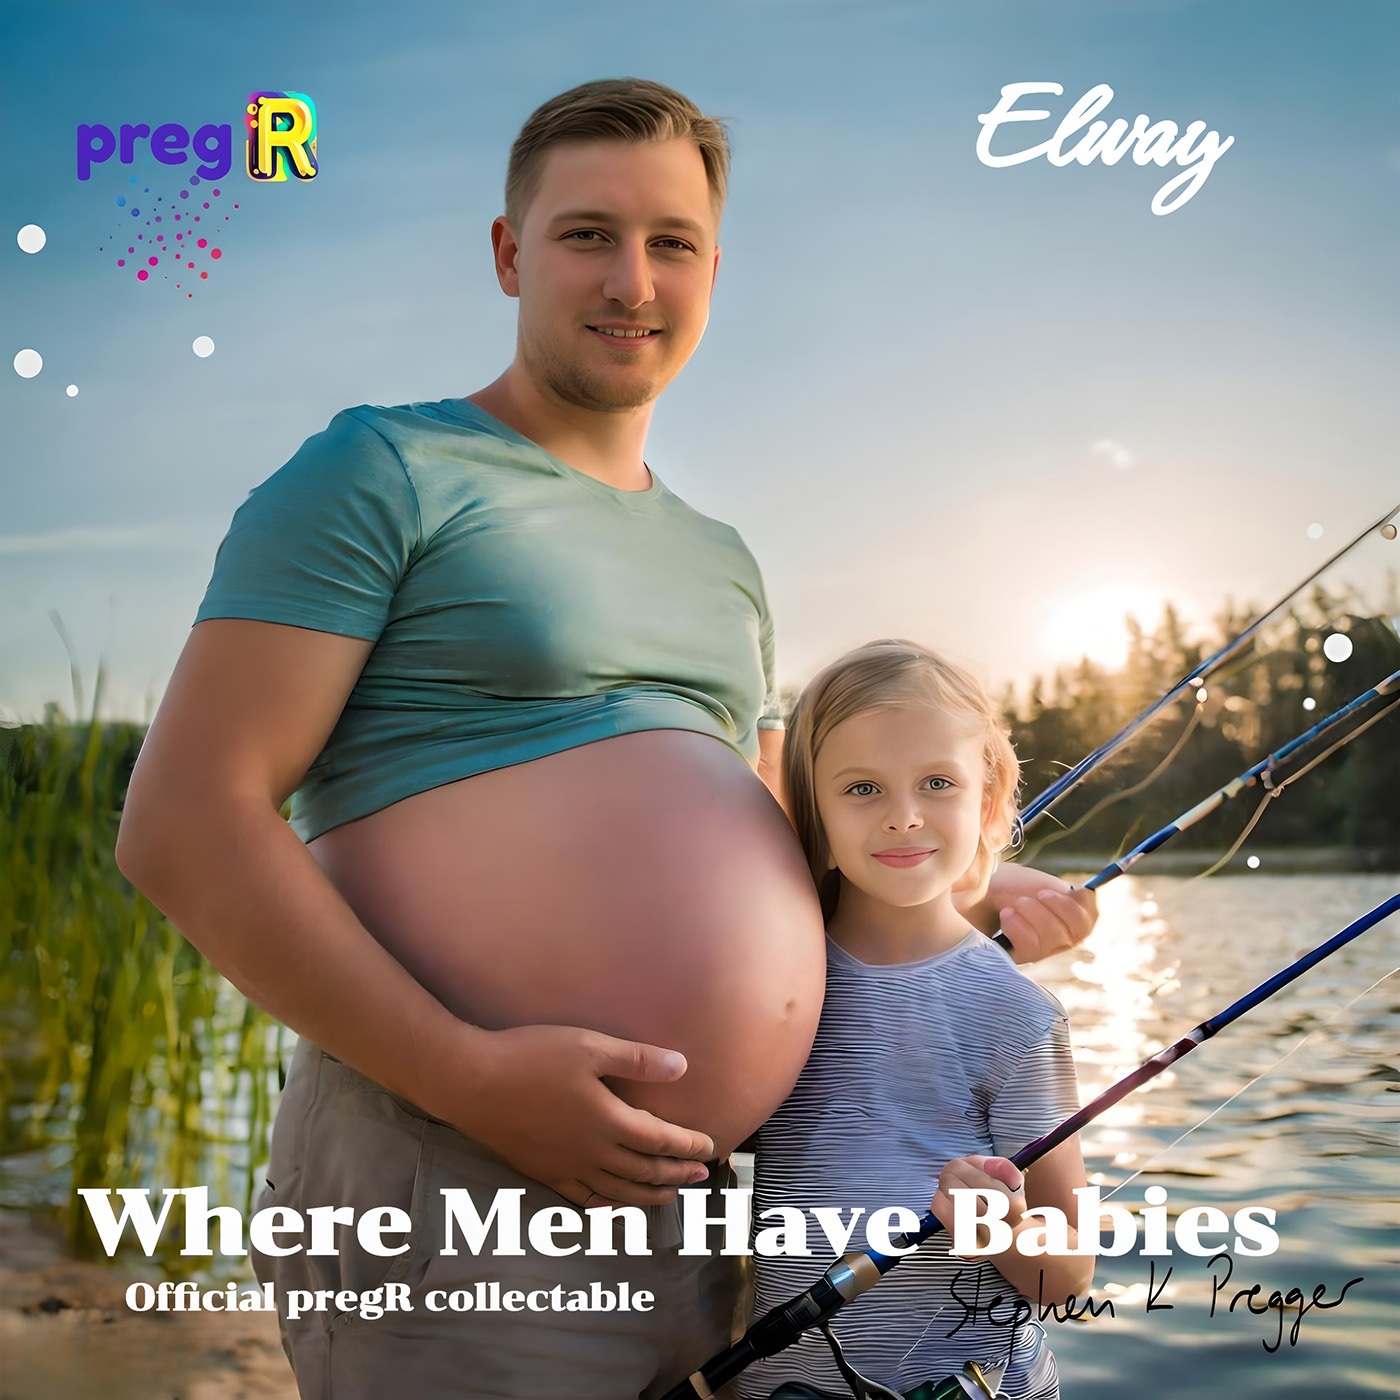 reproductive rights abortion LAWS pregnant men pregnancy pregR transgender women's